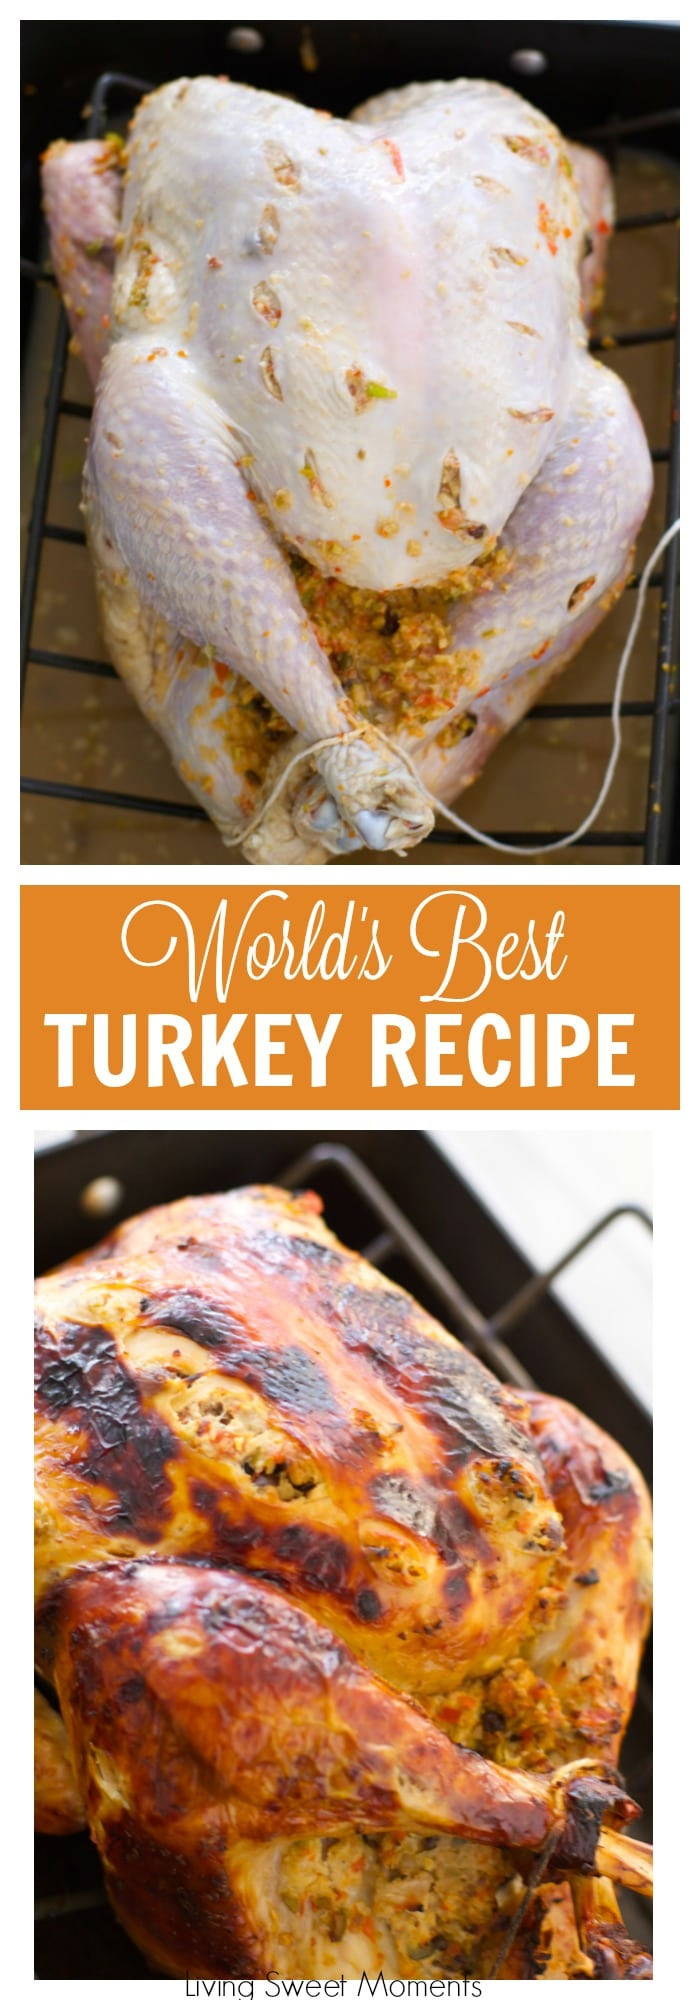 Best Turkey Recipe For Thanksgiving
 The World s Best Turkey Recipe A Tutorial Living Sweet